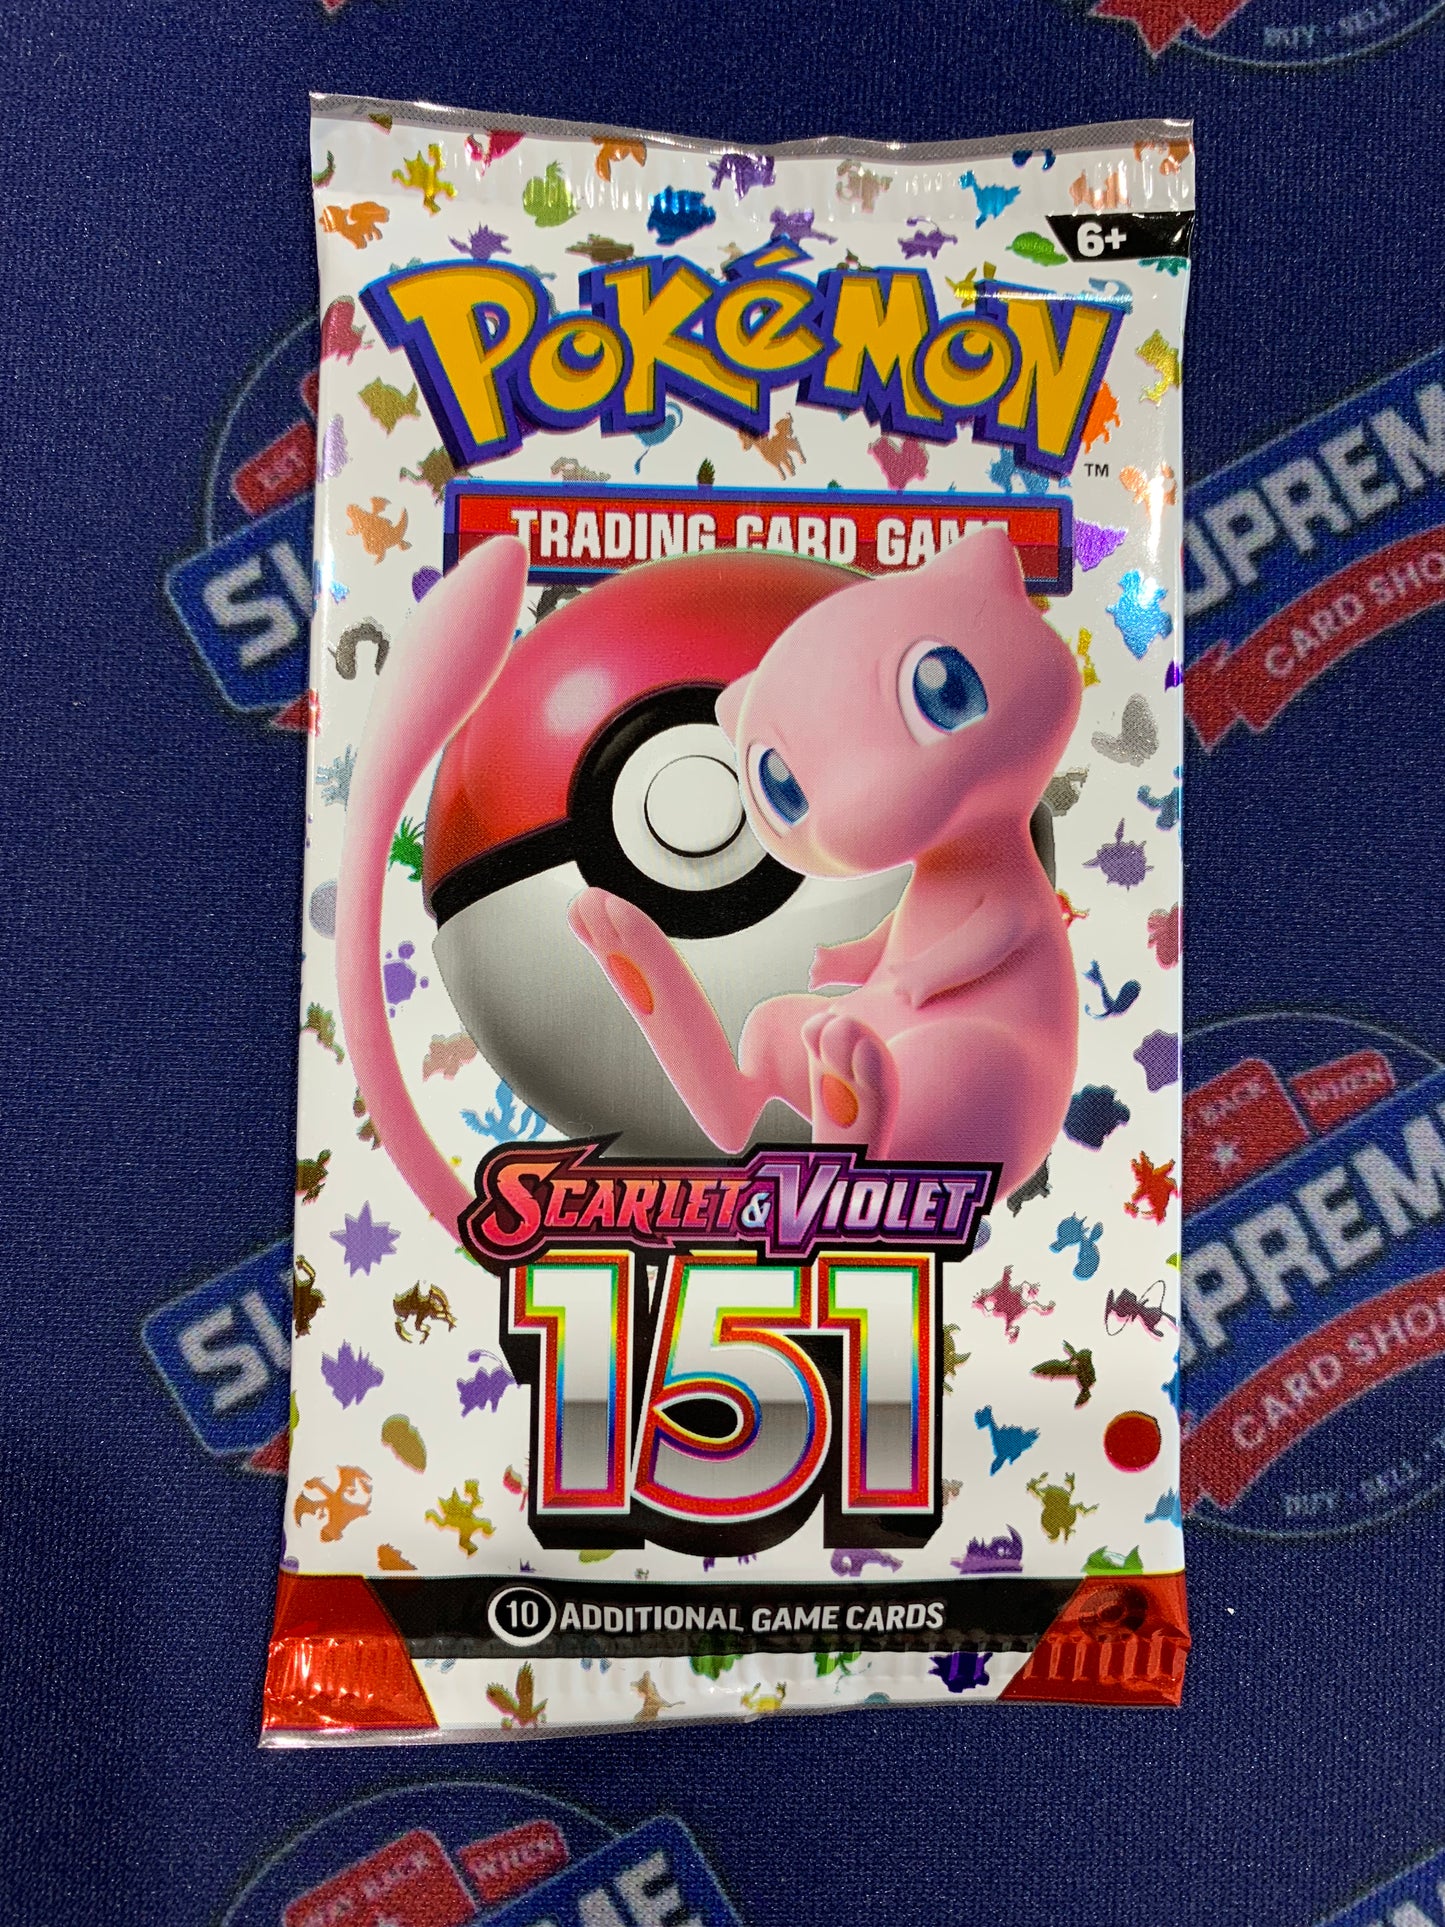 Pokémon 151 English Pack